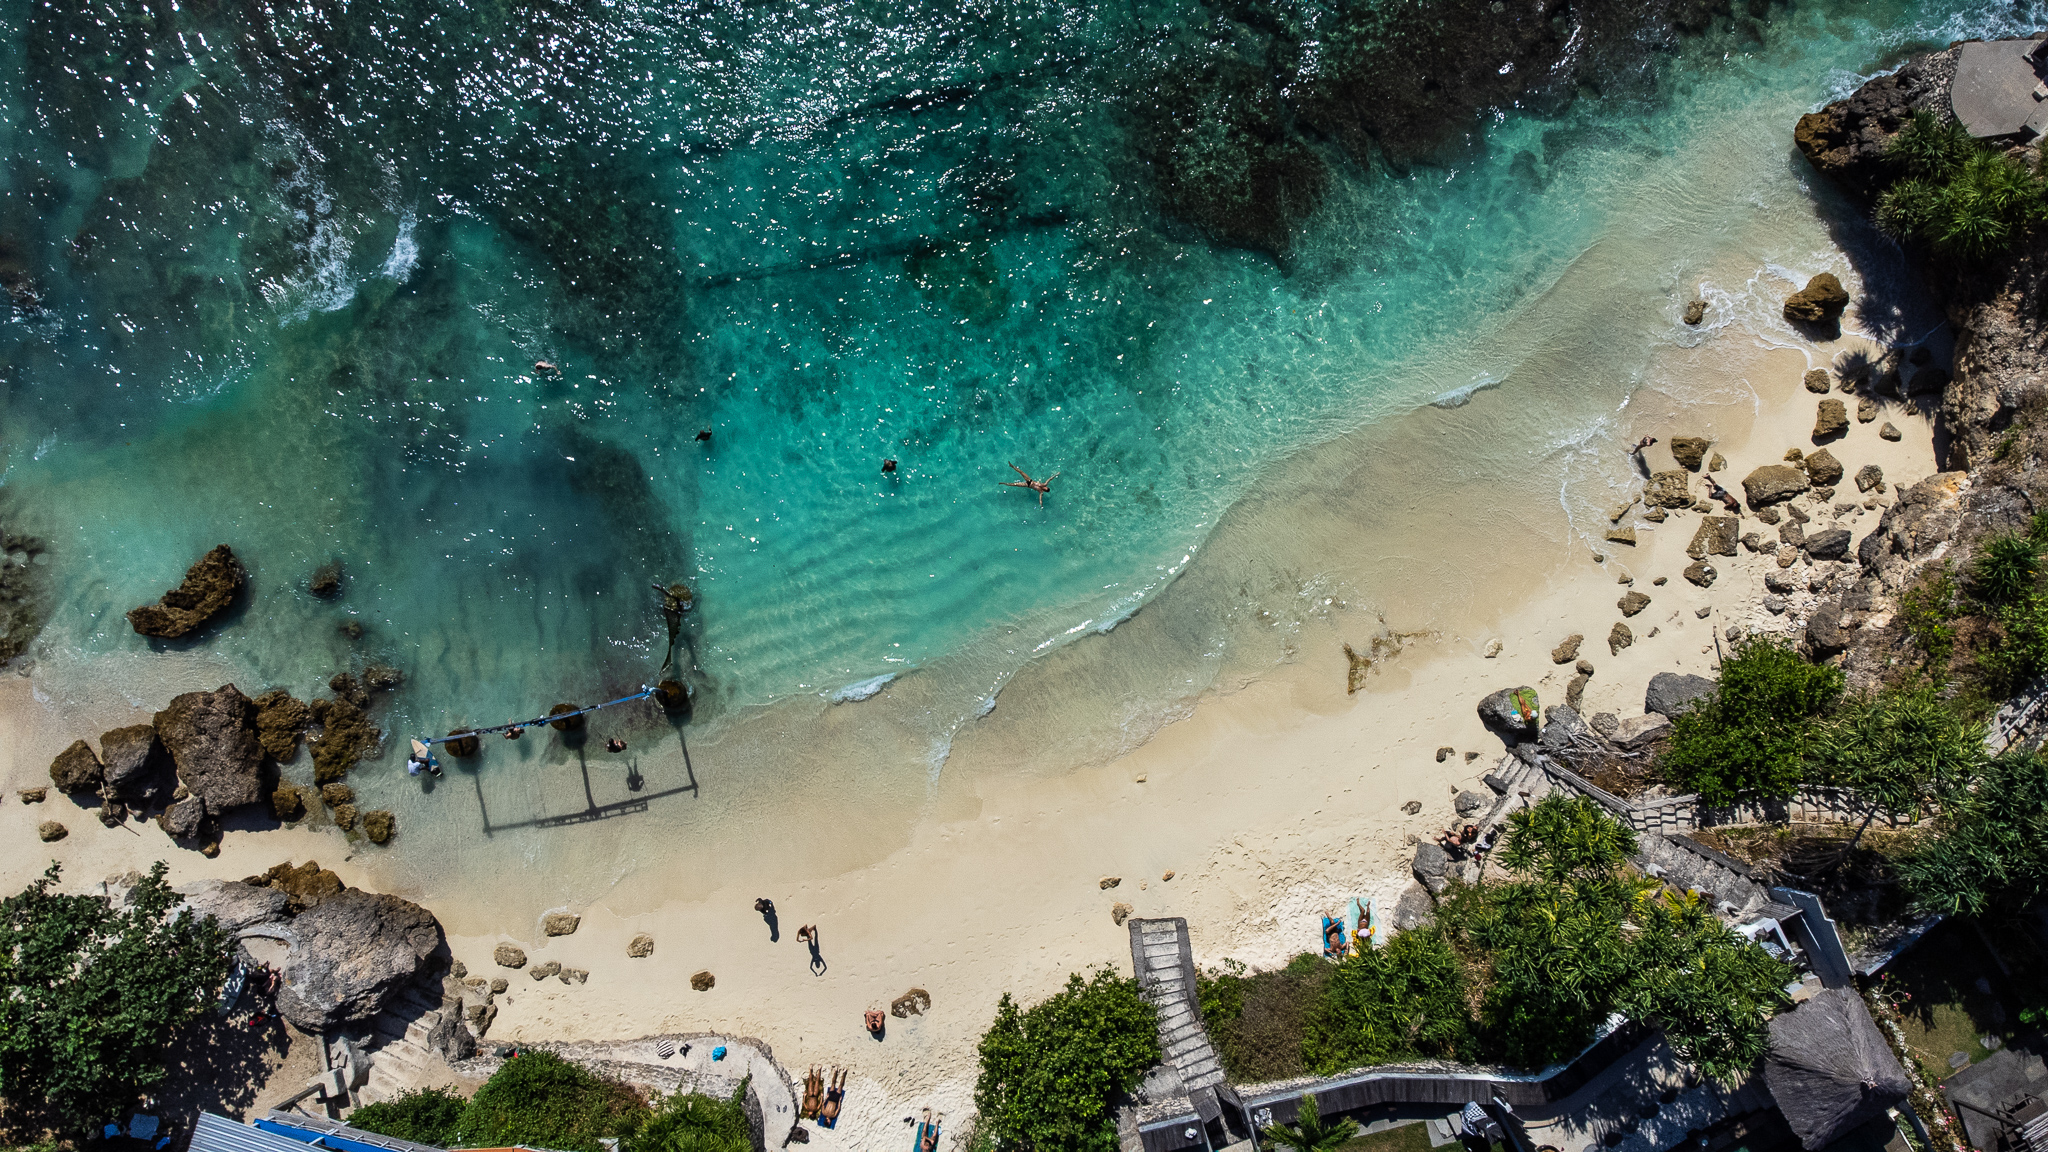 nusa ceningan bali island indonesia iconic secret point beach